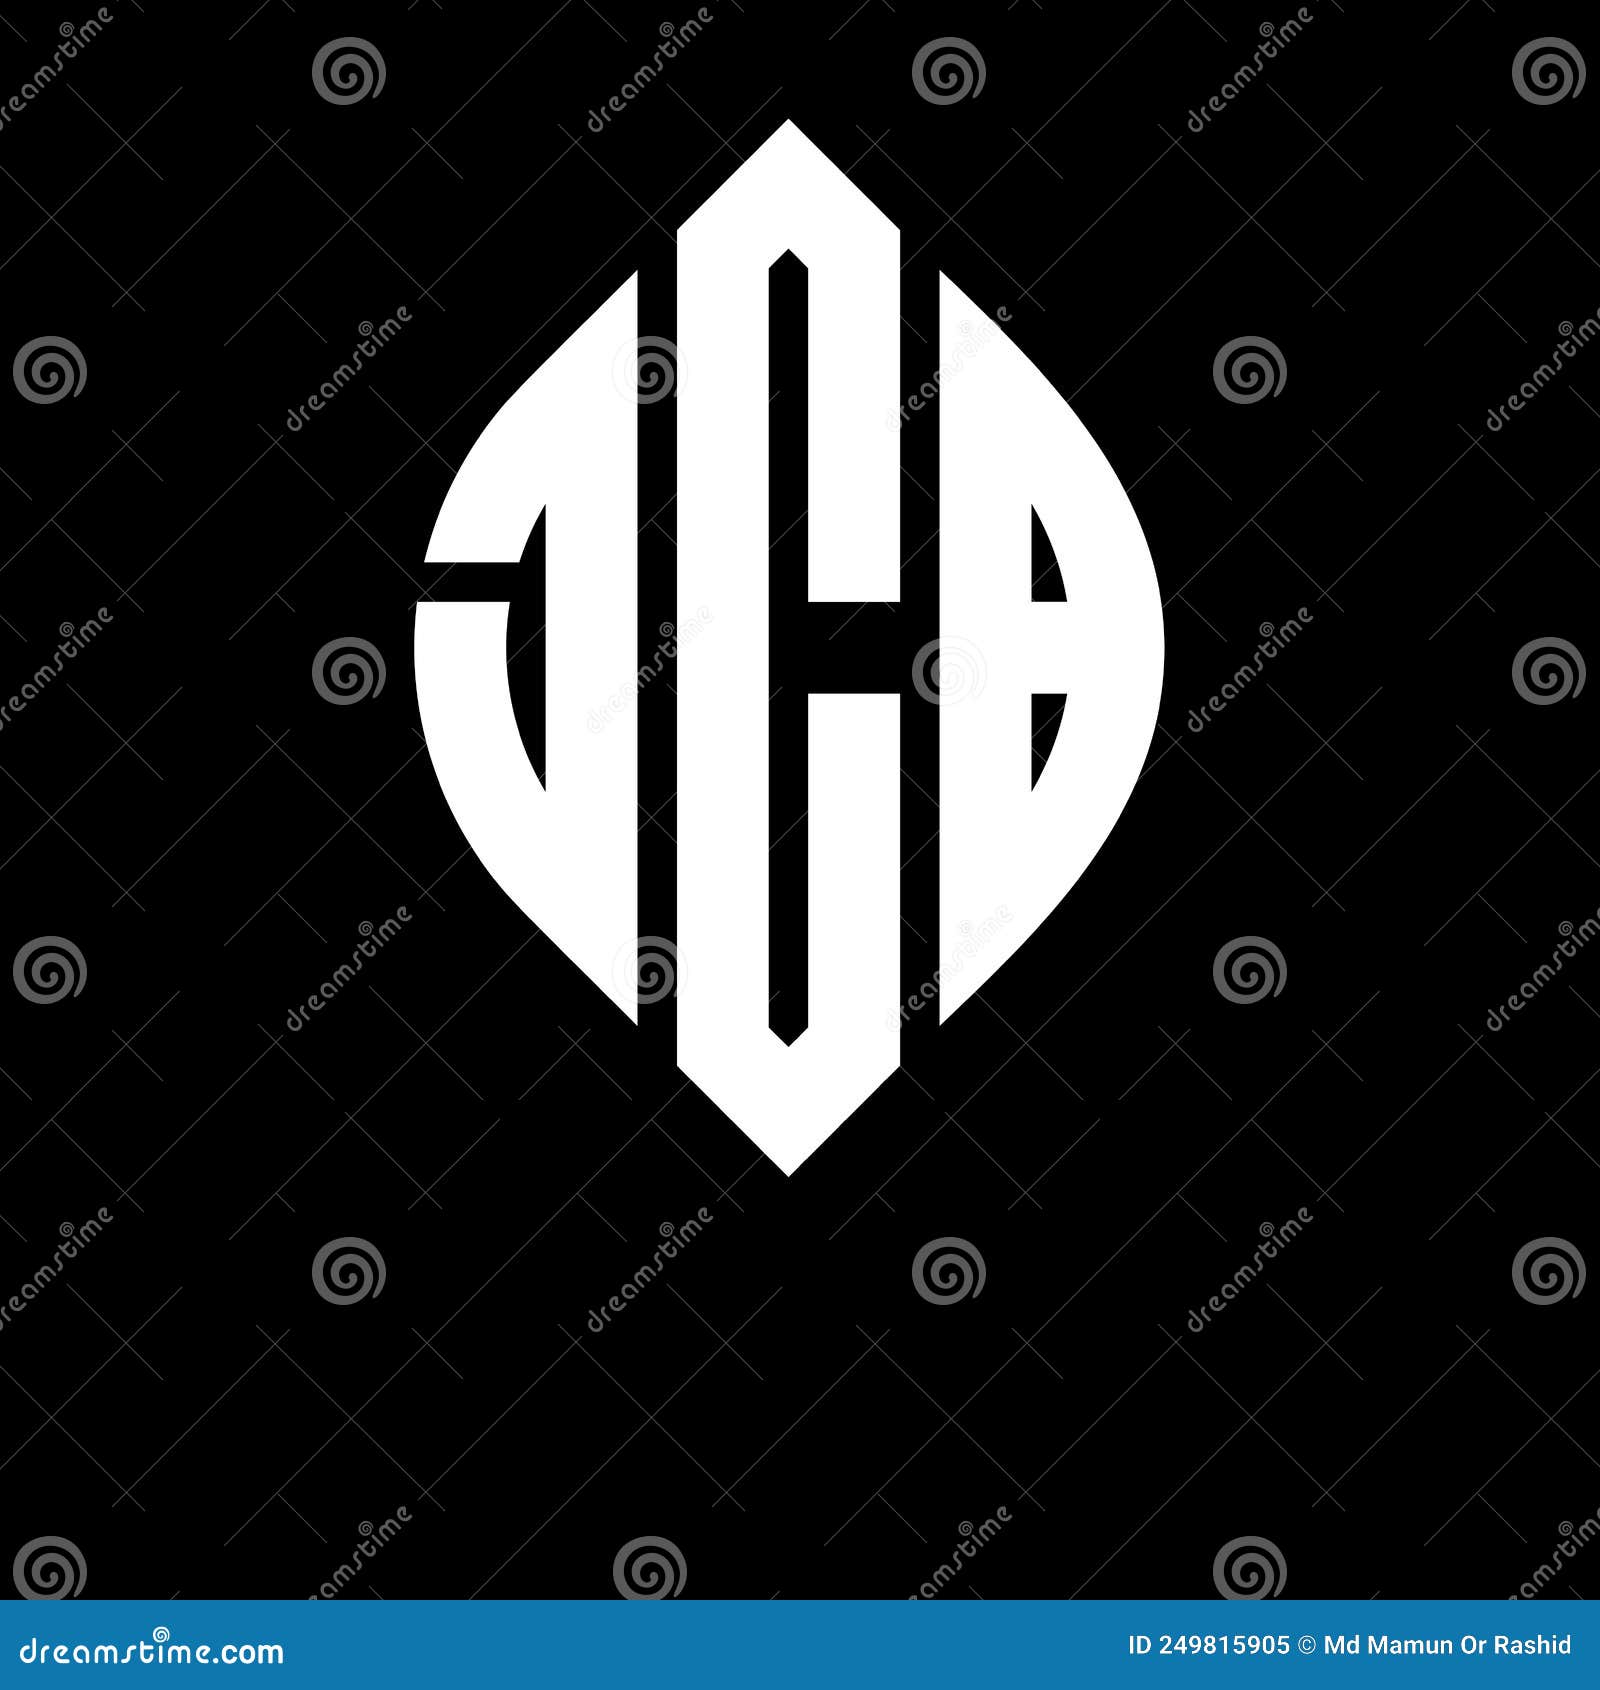 JCB Circle Letter Logo Design with Circle and Ellipse Shape. JCB Ellipse  Letters with Typographic Style Stock Vector - Illustration of elegant,  elegance: 249815905